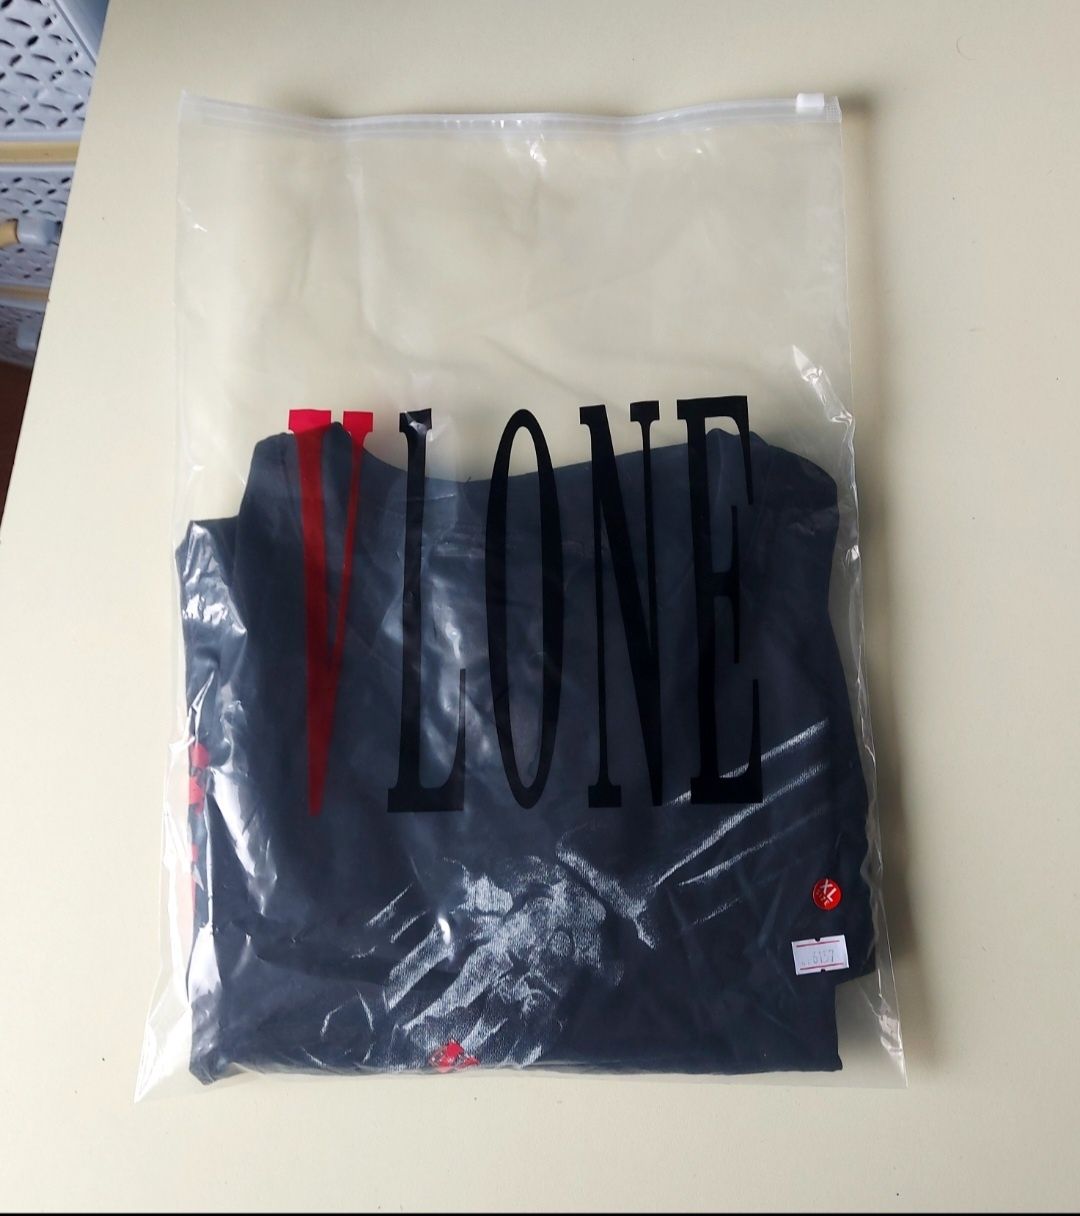 Vlone x Never Broke Again Bones T-shirt
Black